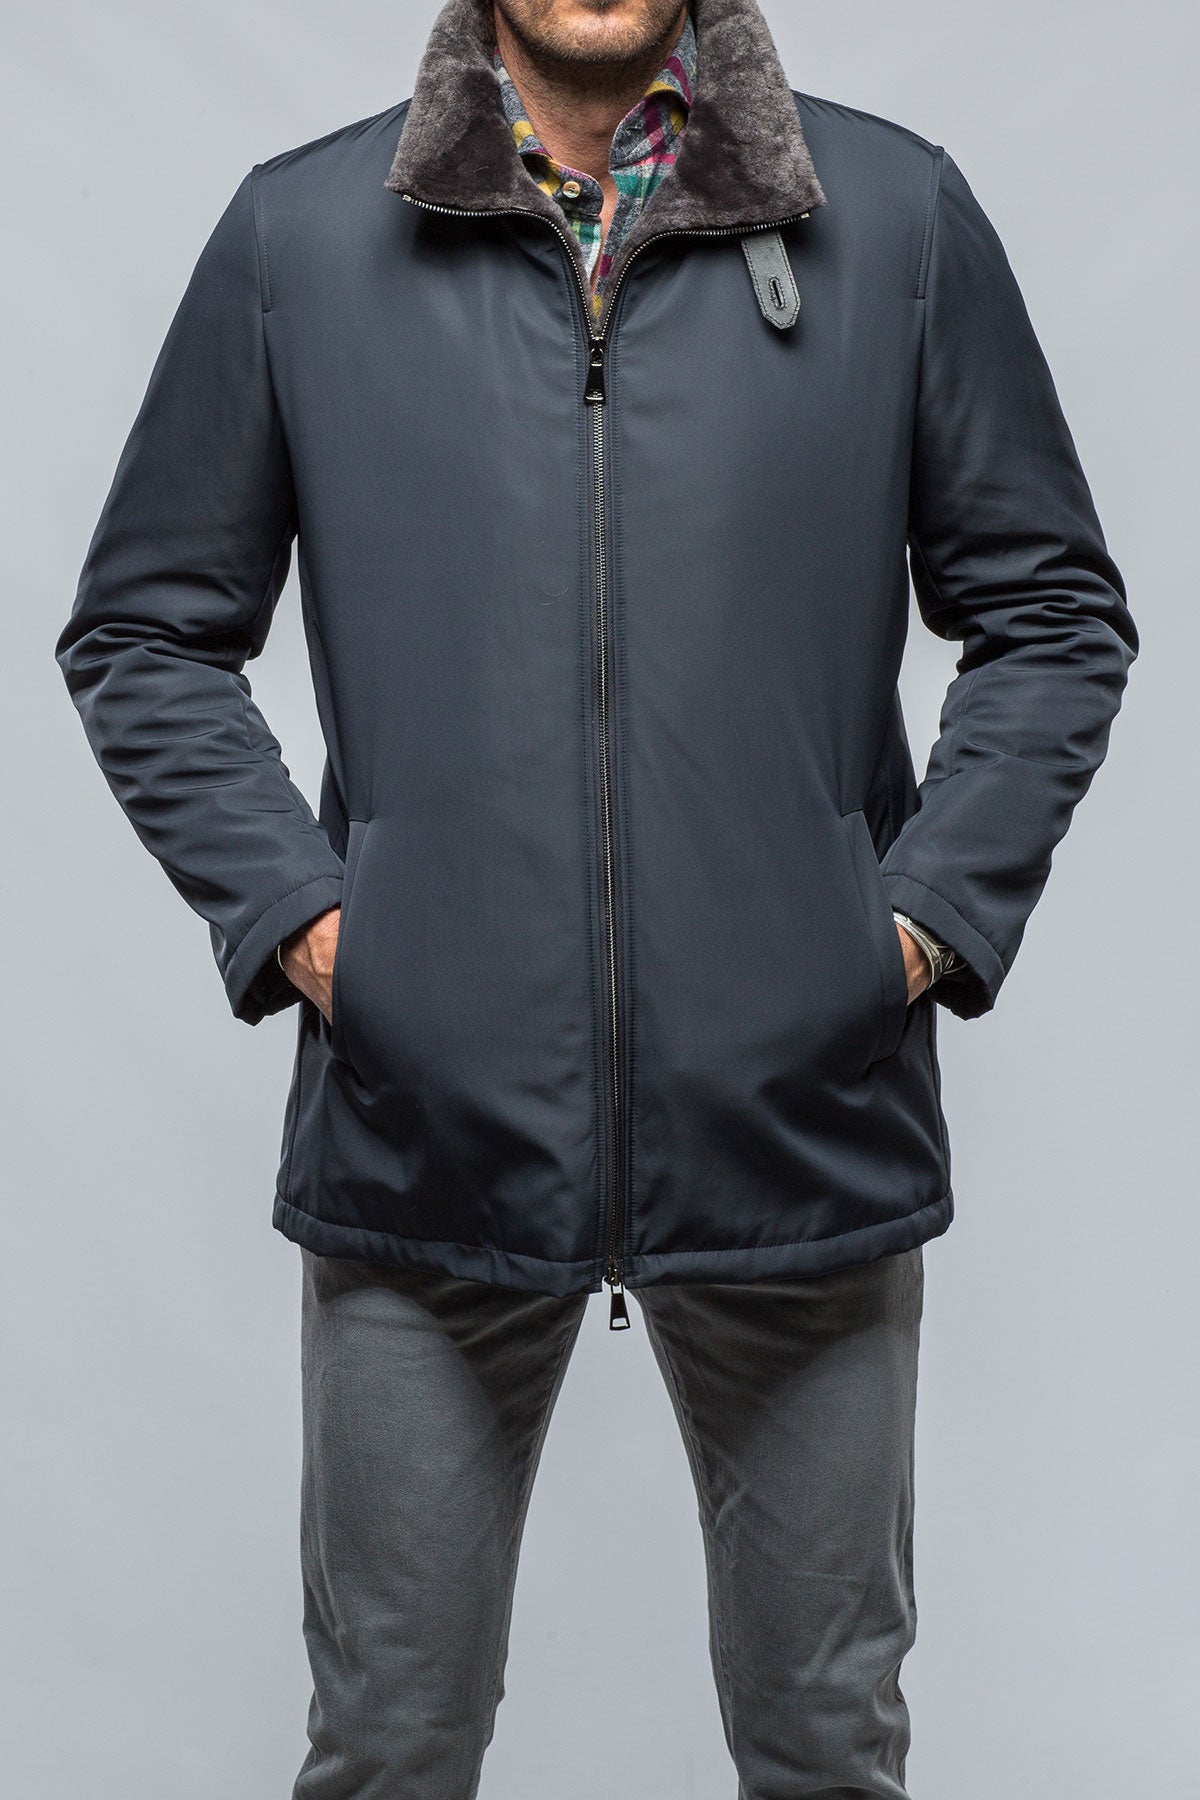 Carlton Raincoat w/Merino Shearling Lining | Samples - Mens - Outerwear - Shearling | DiBello